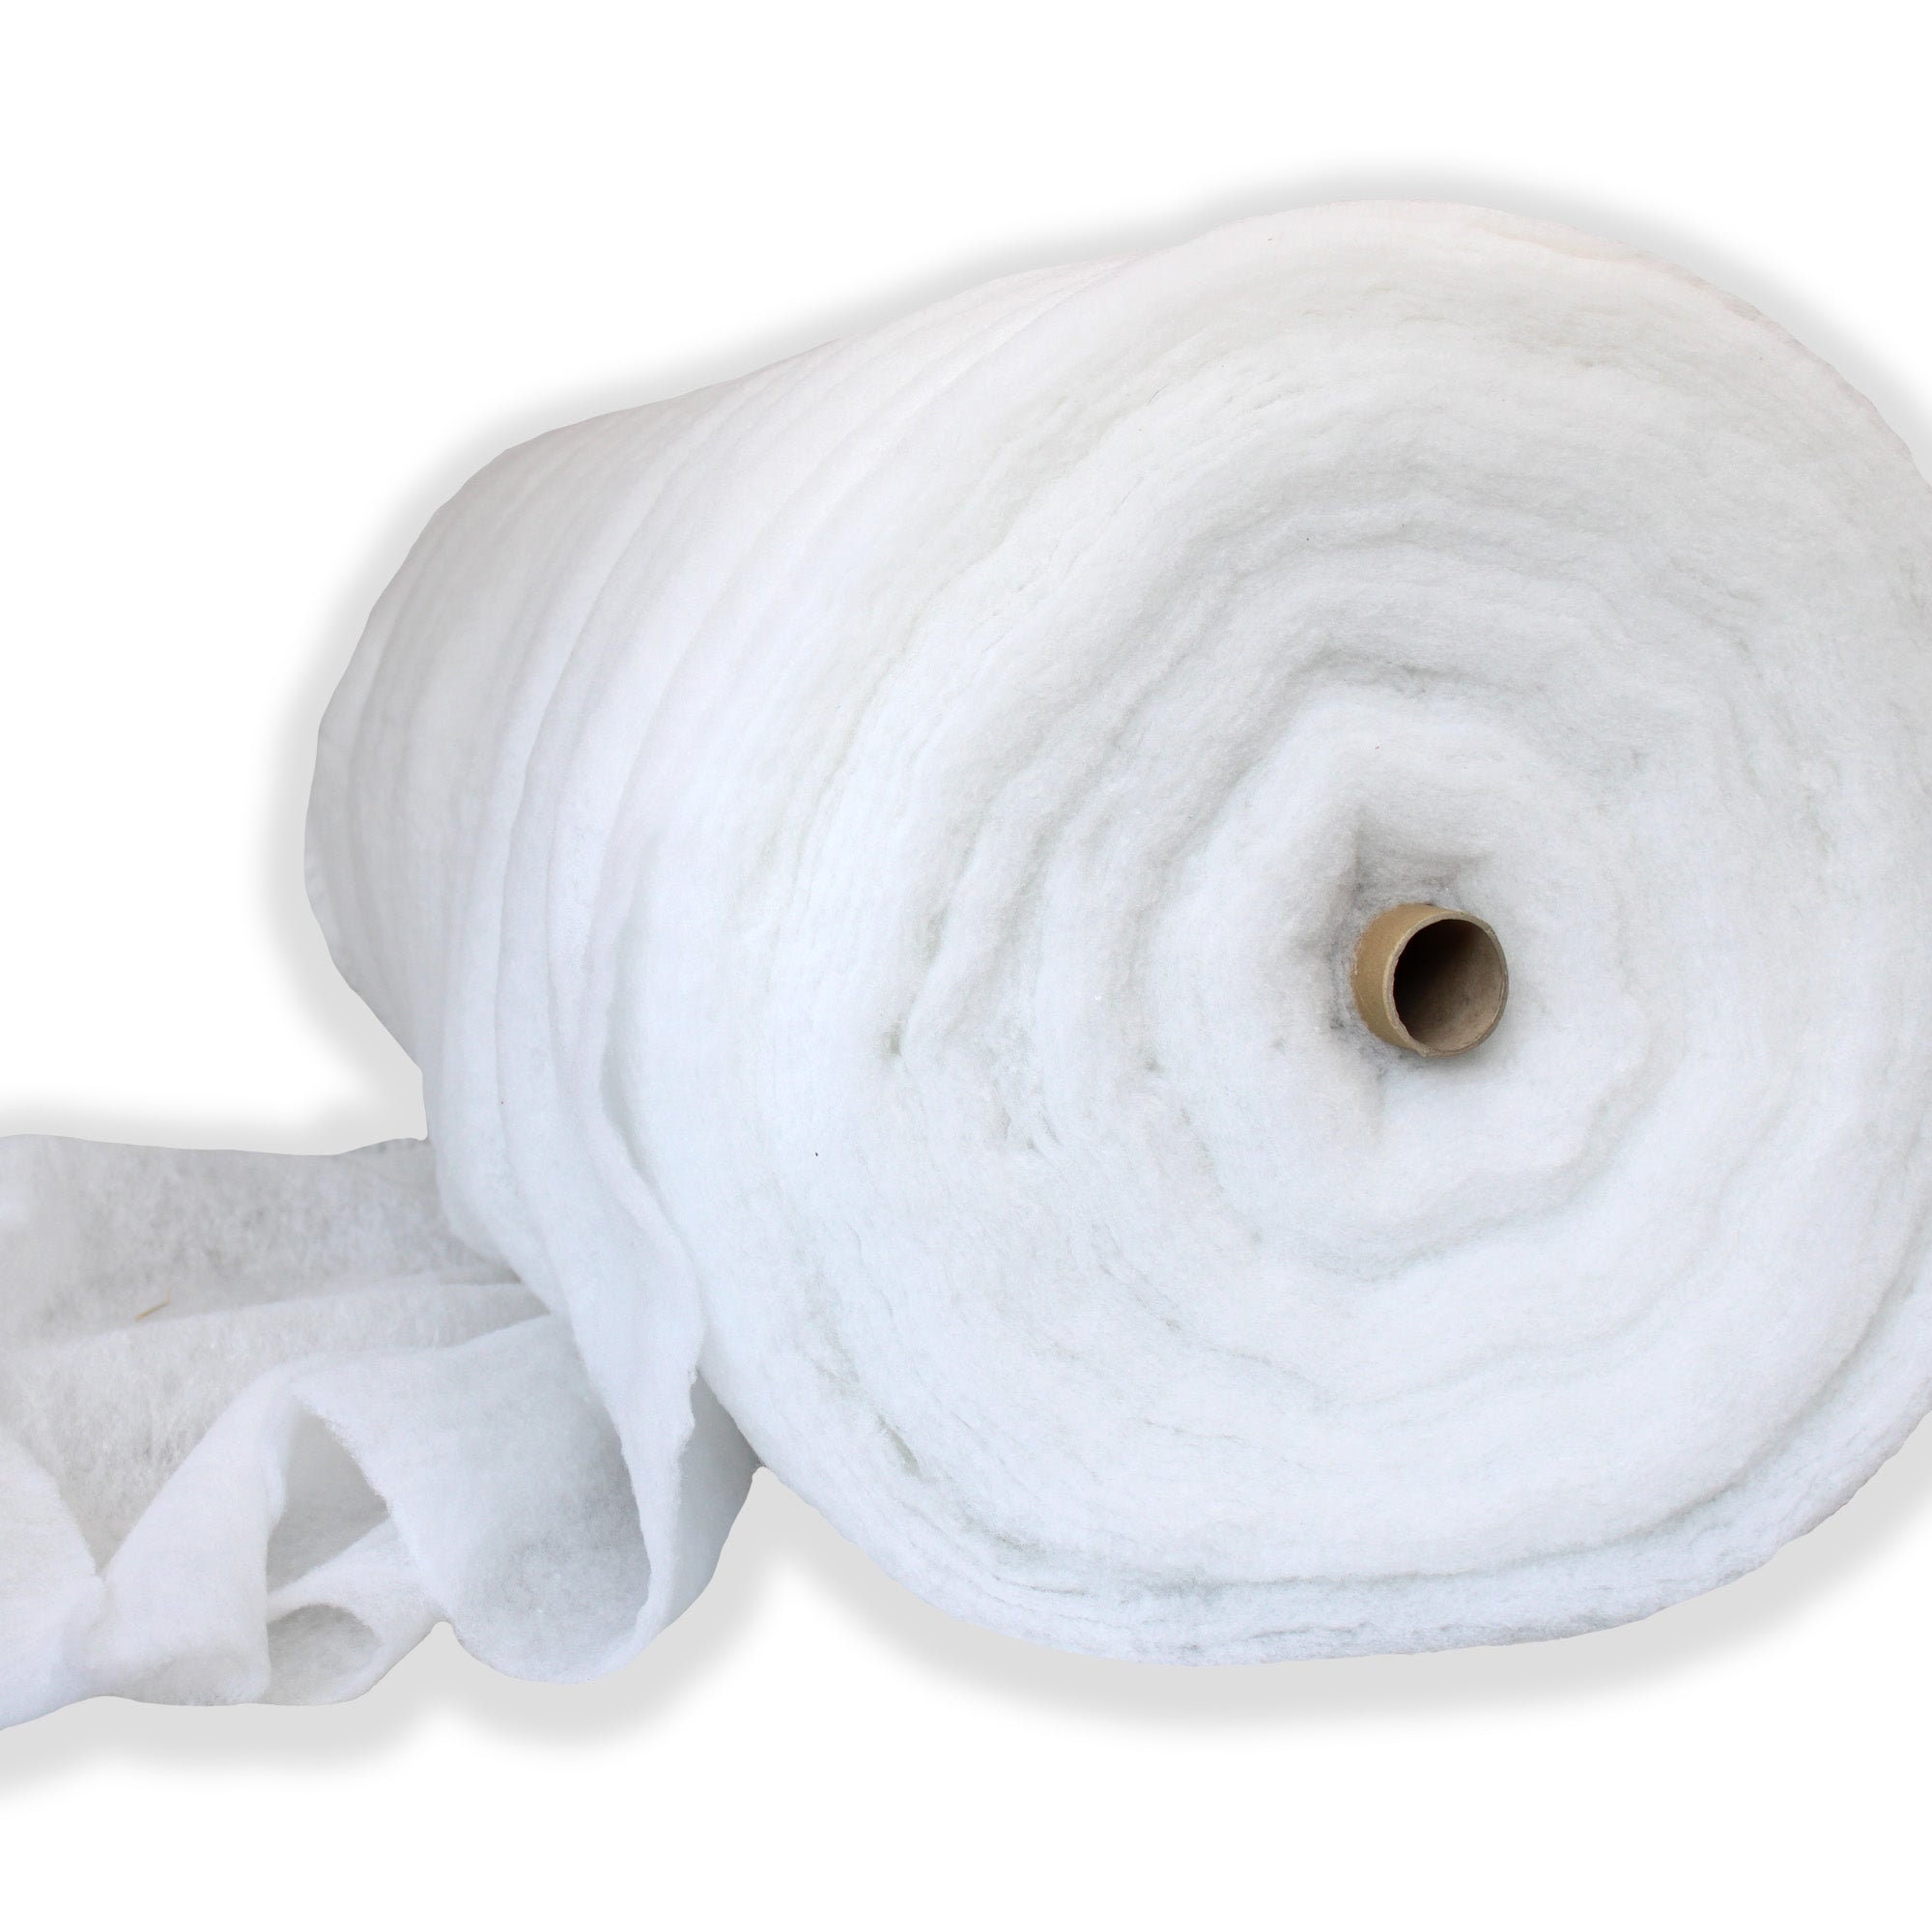 Polyester Stuffing High Elastic Polyester PP Cotton Environmental Stuffing Fiber Filling Material Toys Pillows Doll Insert Fiberfill (200g)